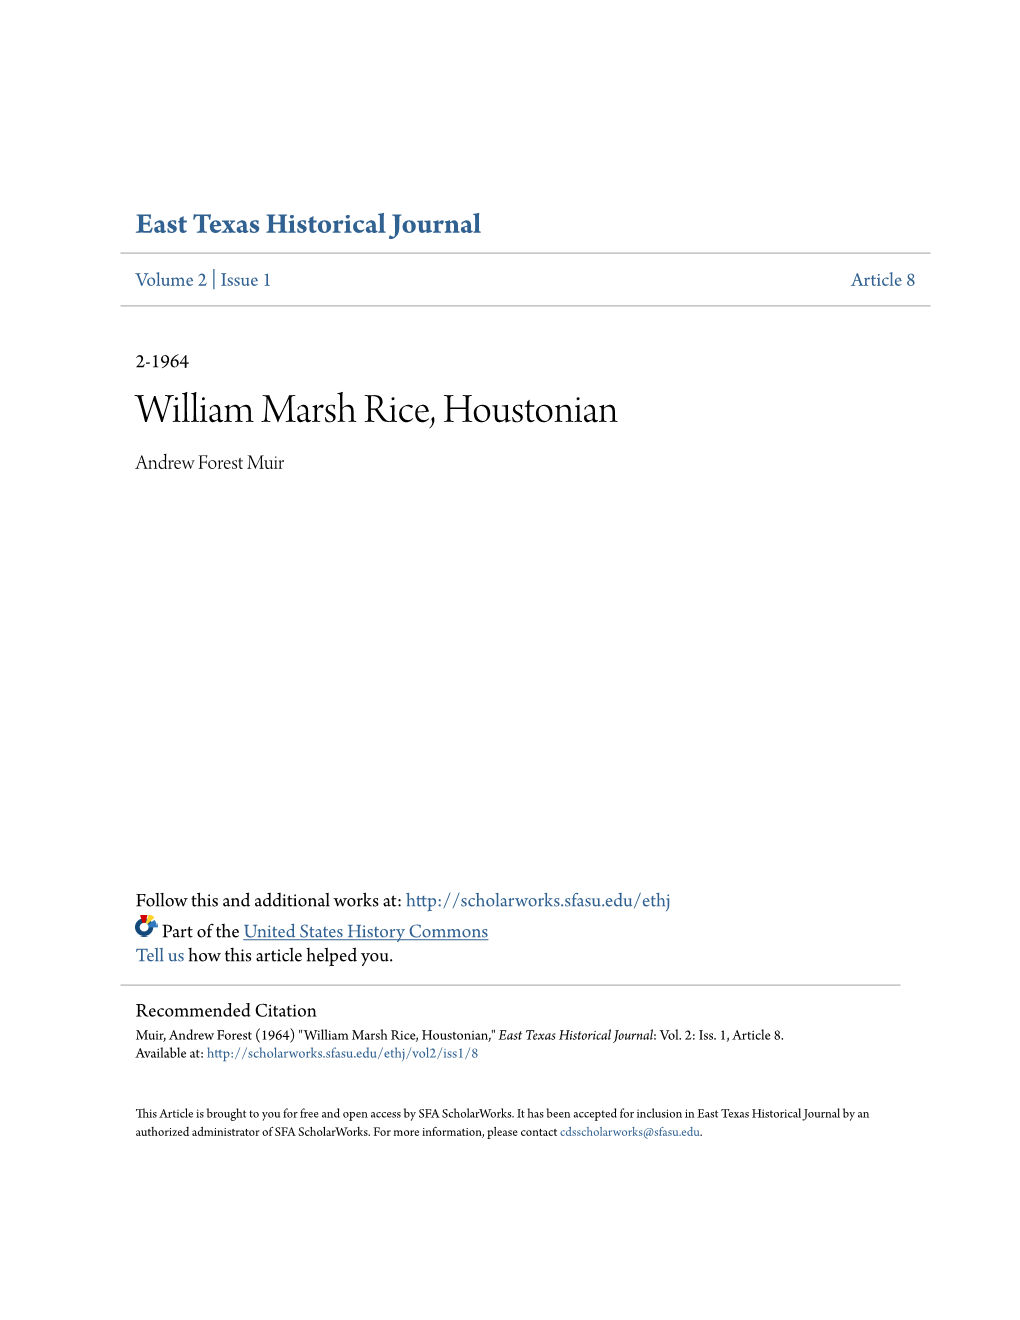 William Marsh Rice, Houstonian Andrew Forest Muir